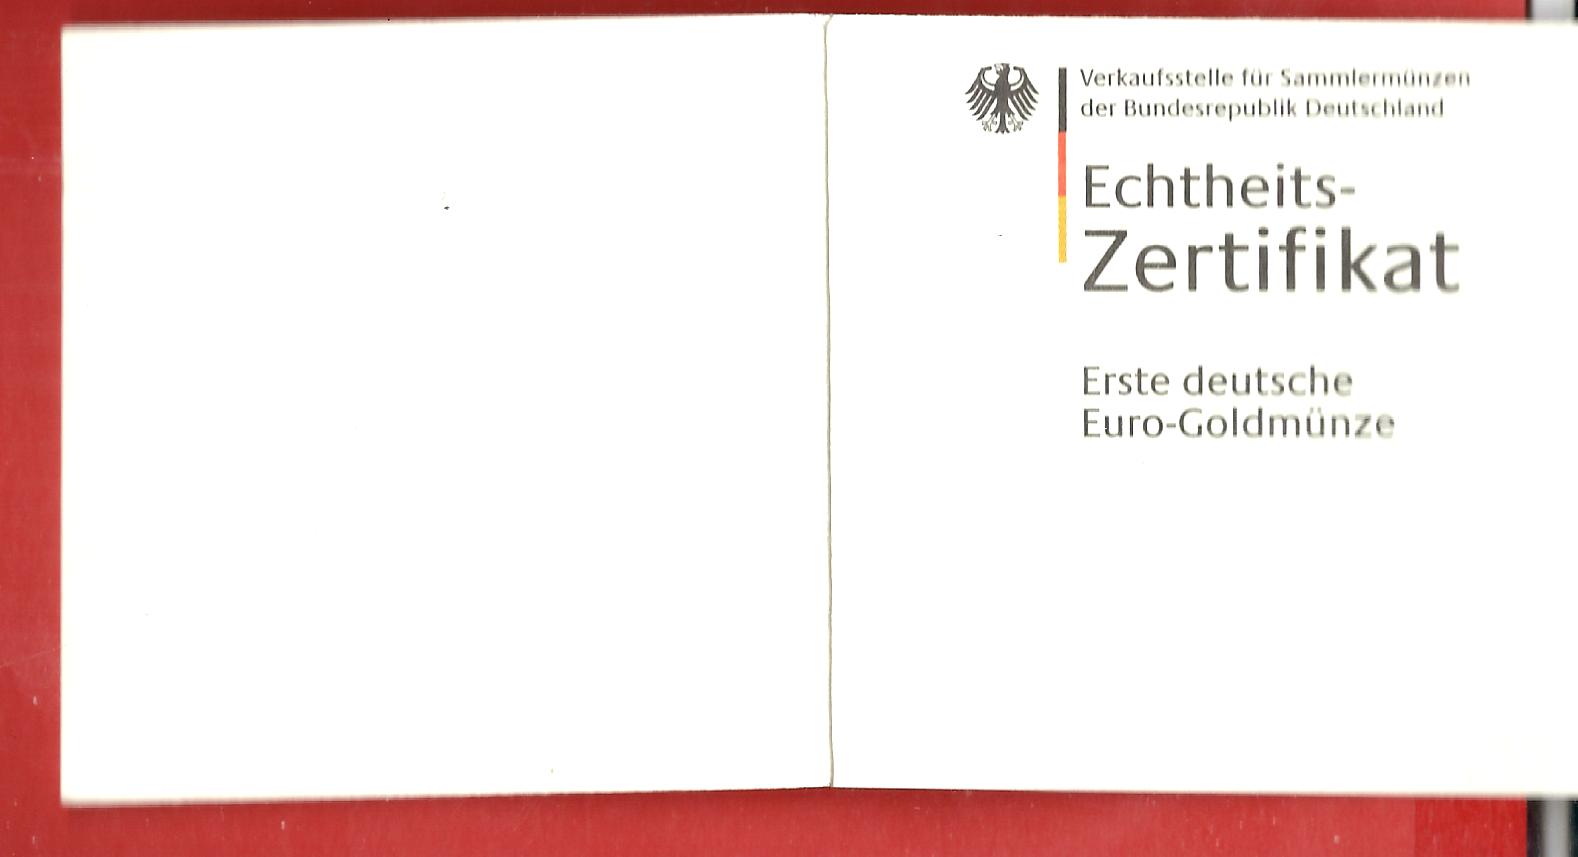  Sonderangebot Original Zertifikat 200€ Brd 2002 Golden Gate Münzenankauf Koblenz Frank Maurer j216   